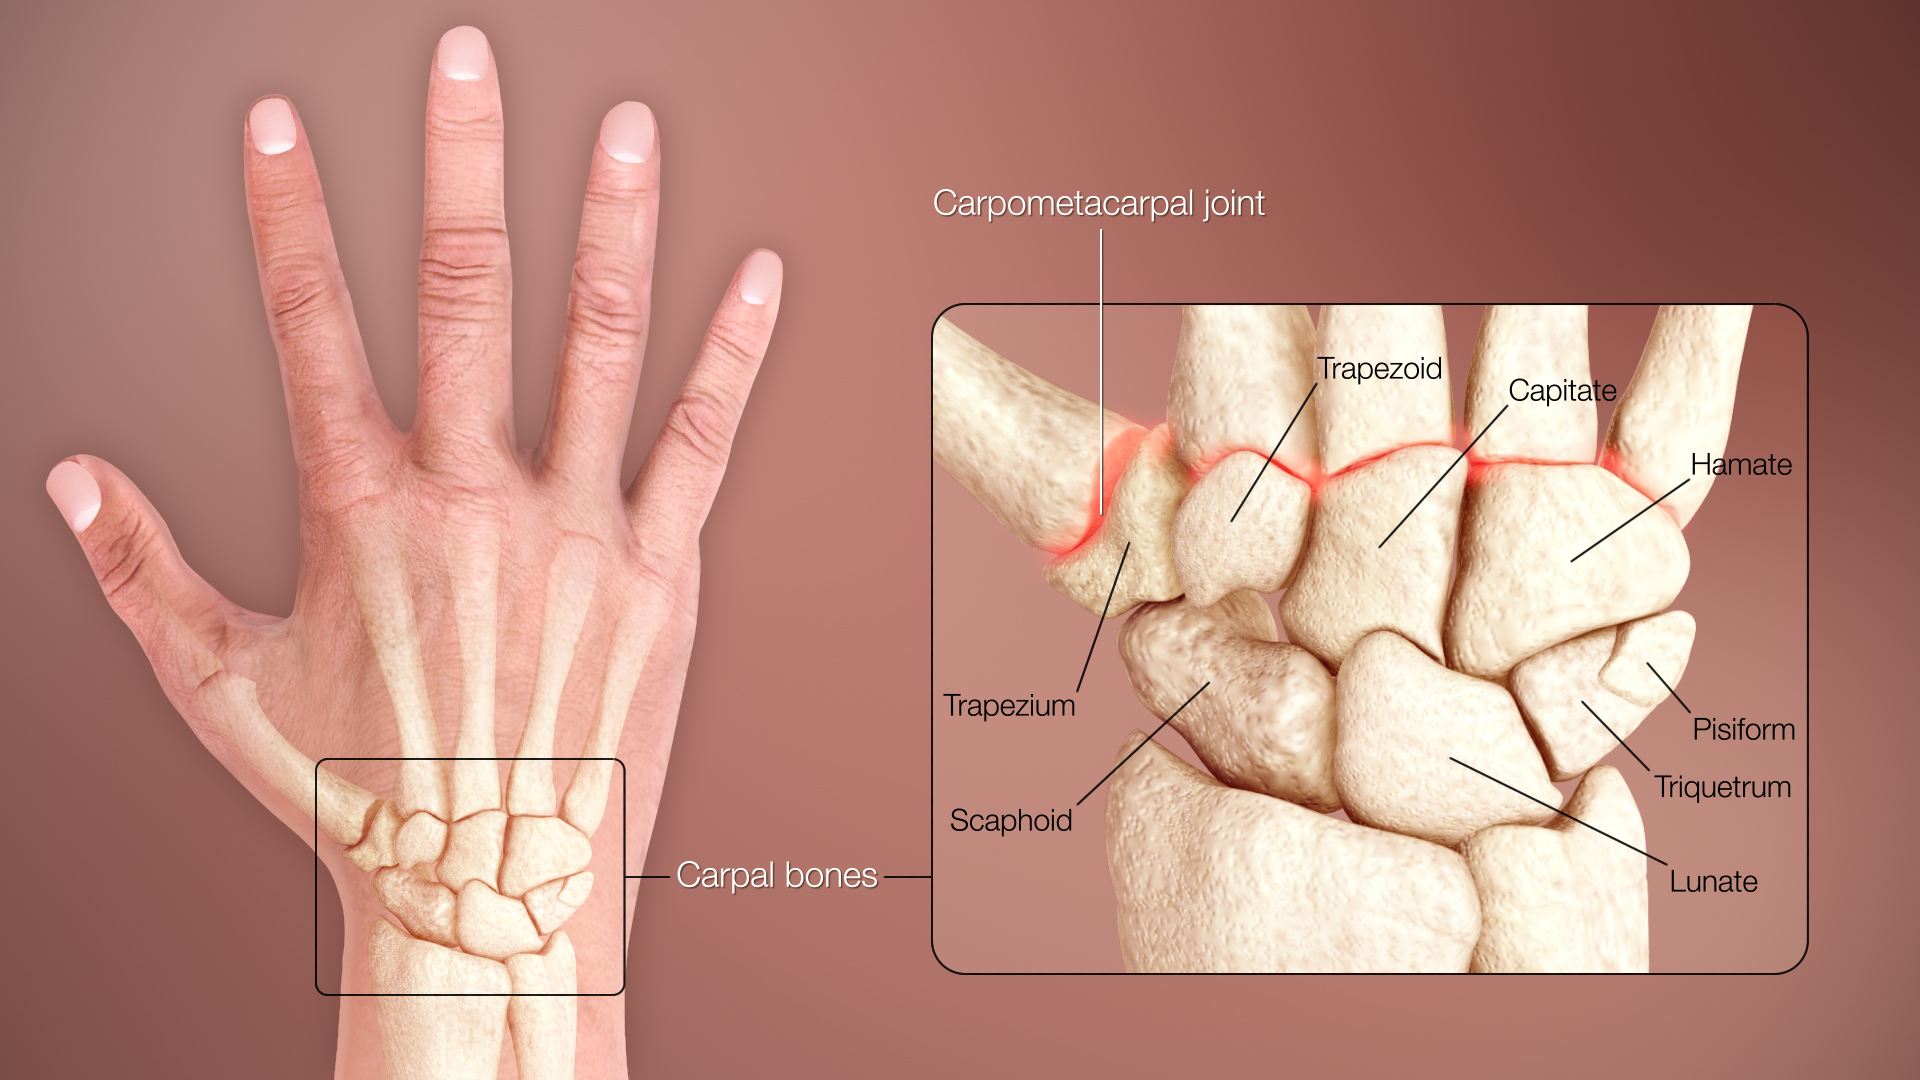 <p>3D Medical illustration of the Wrist Bones of the Human Body</p>